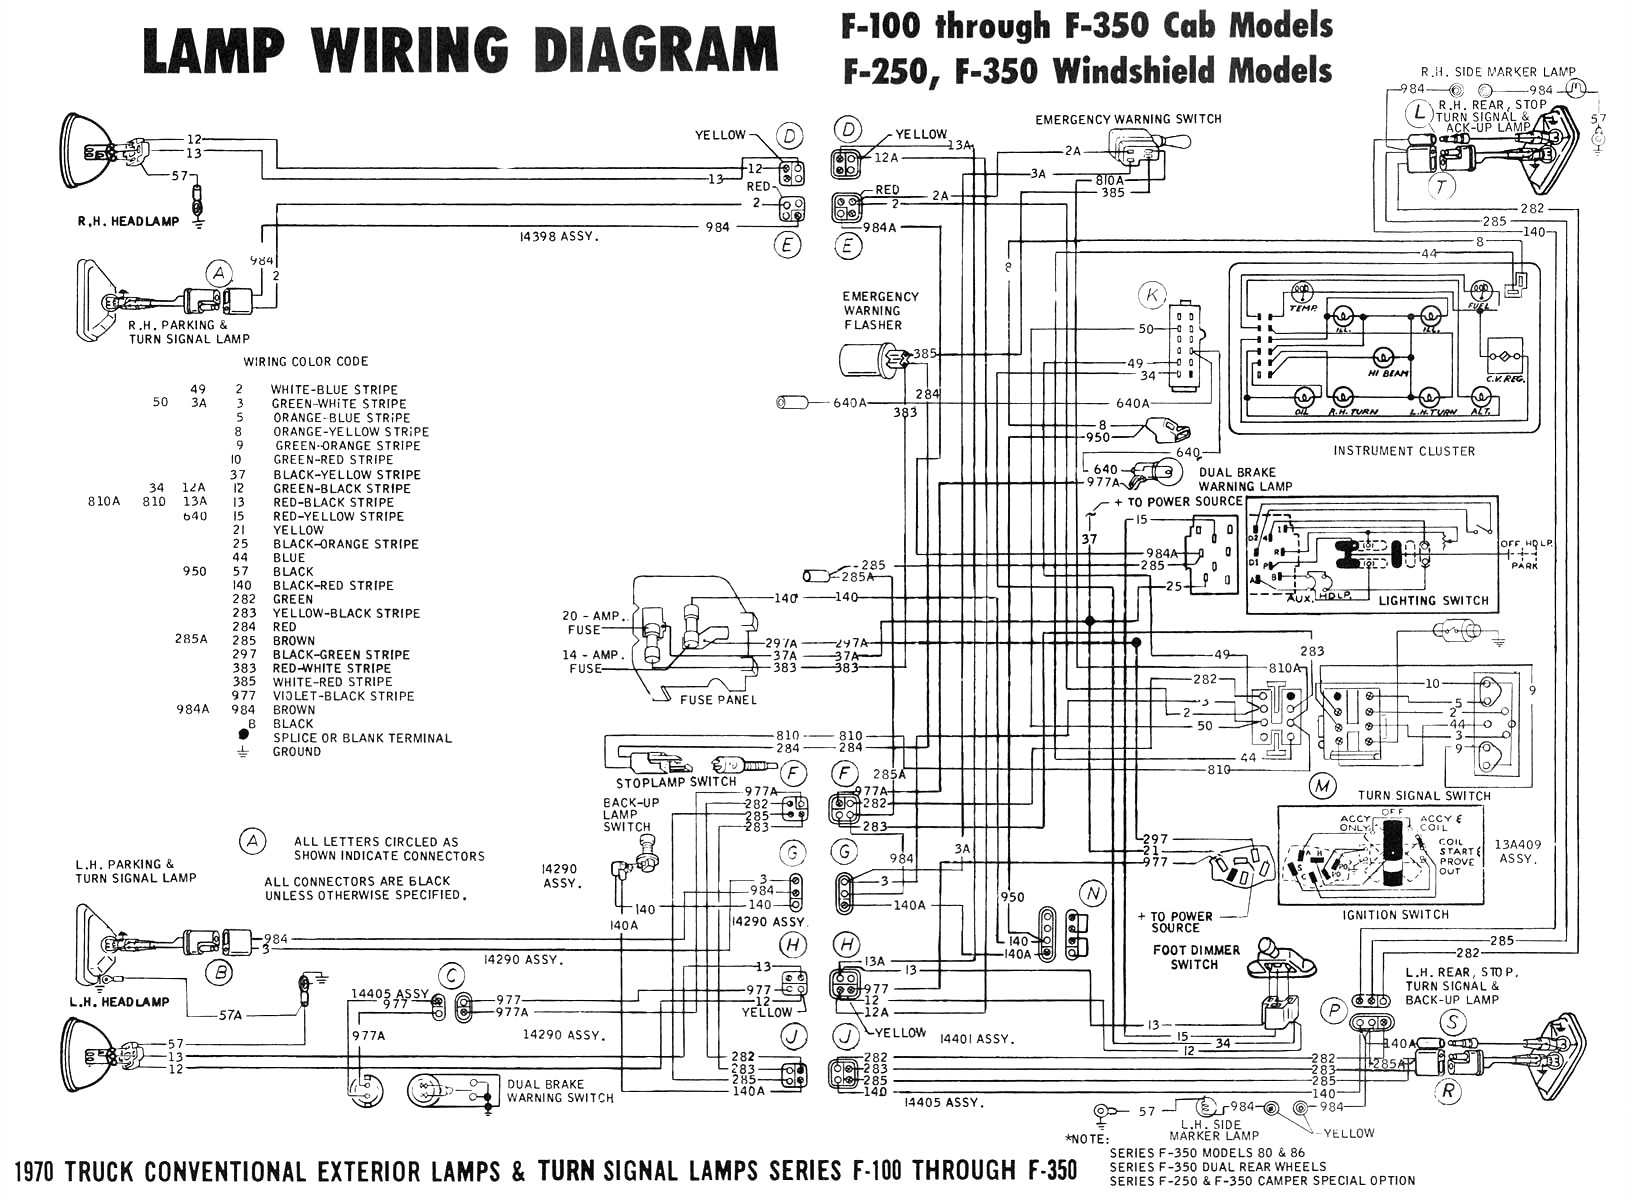 1986 ford f 250 fuse box diagram wiring diagram post 86 f250 fuse box wiring wire